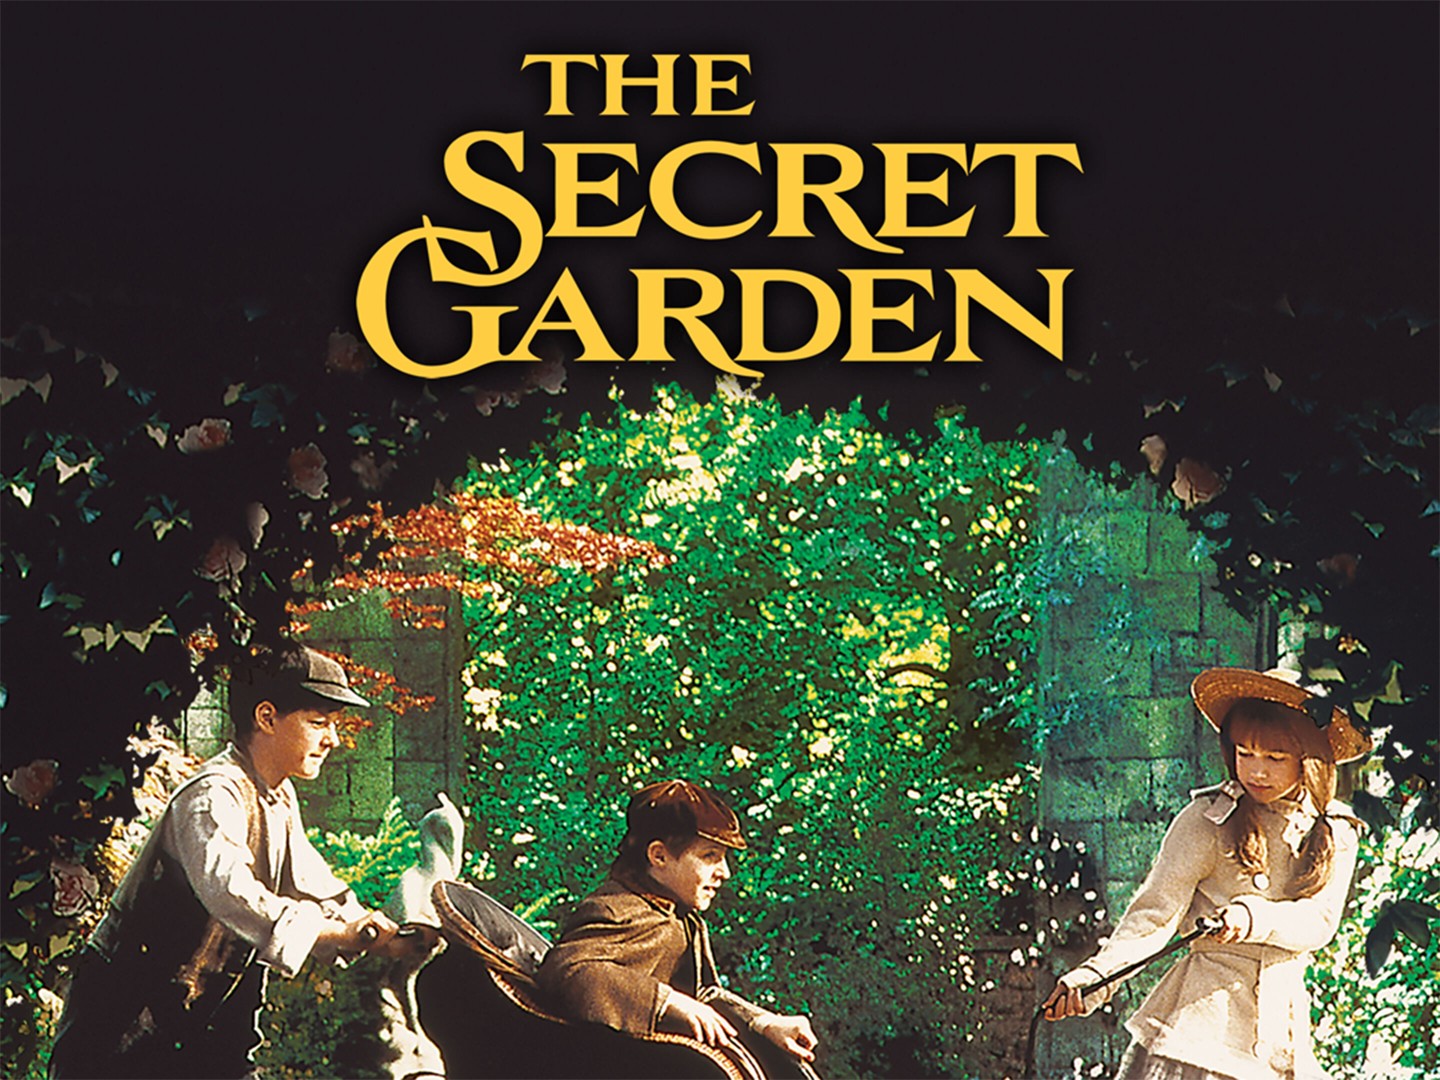 The Secret Garden release date, cast, plot, trailer